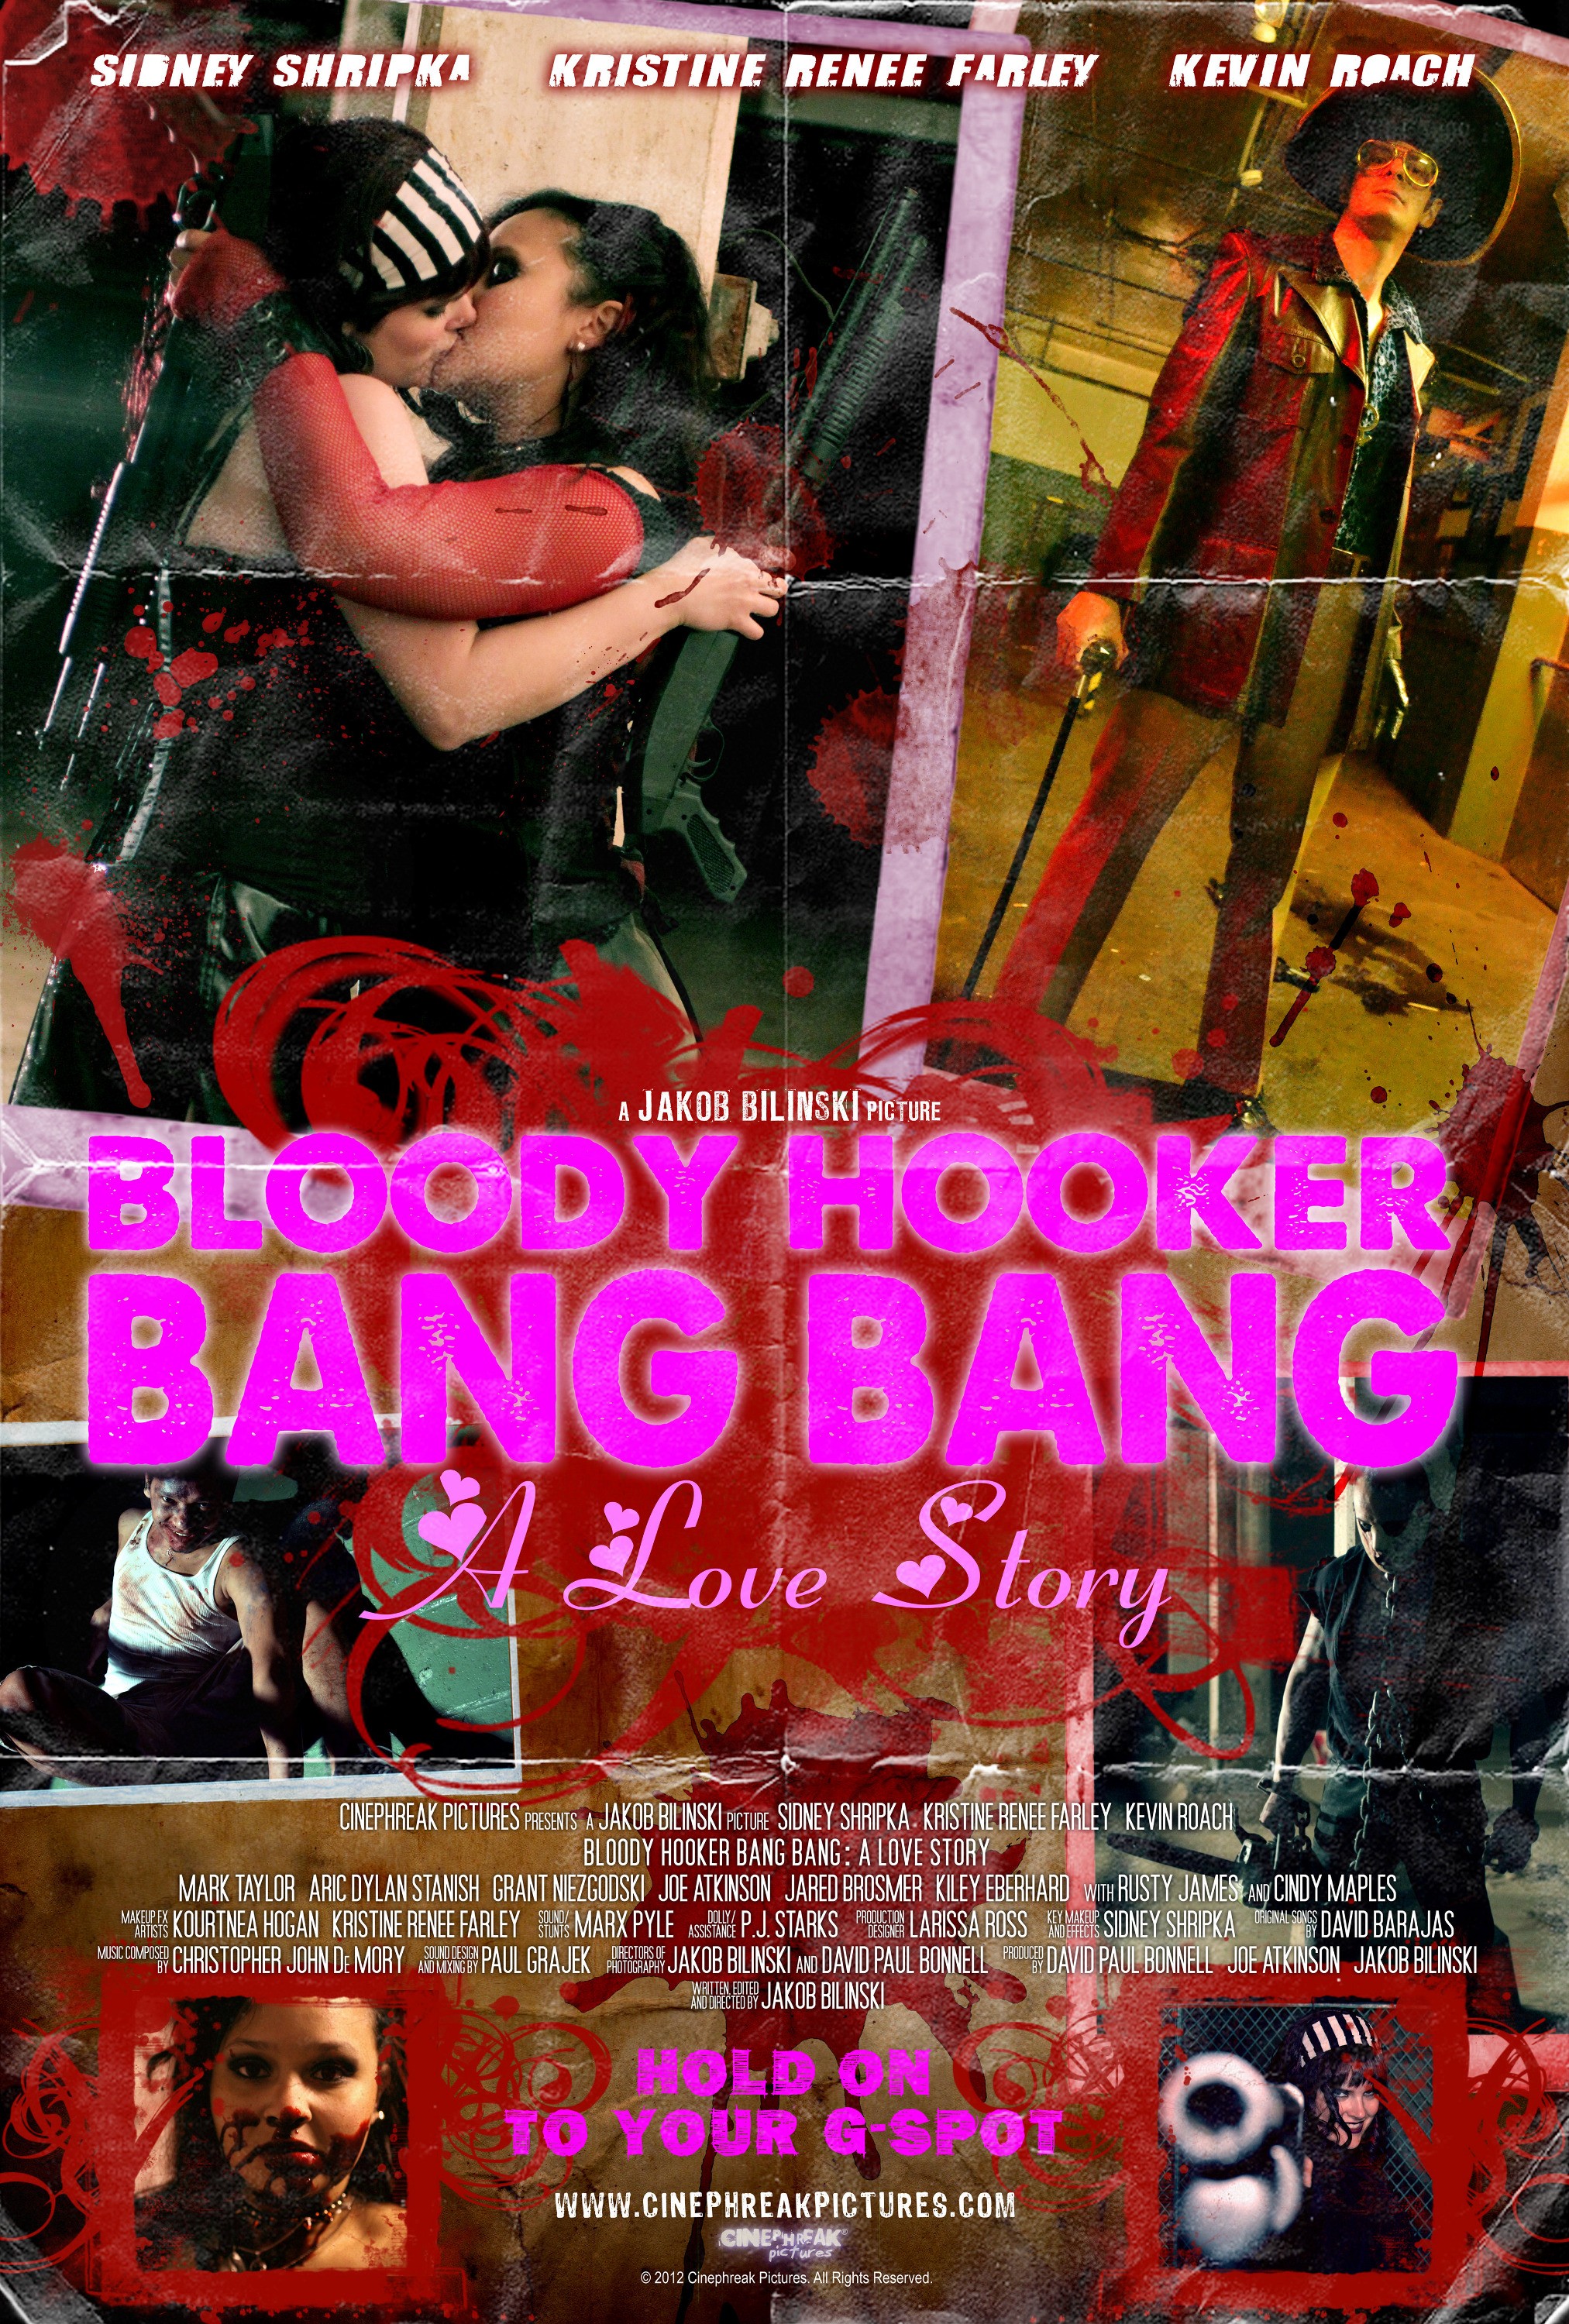 Mega Sized Movie Poster Image for Bloody Hooker Bang Bang: A Love Story